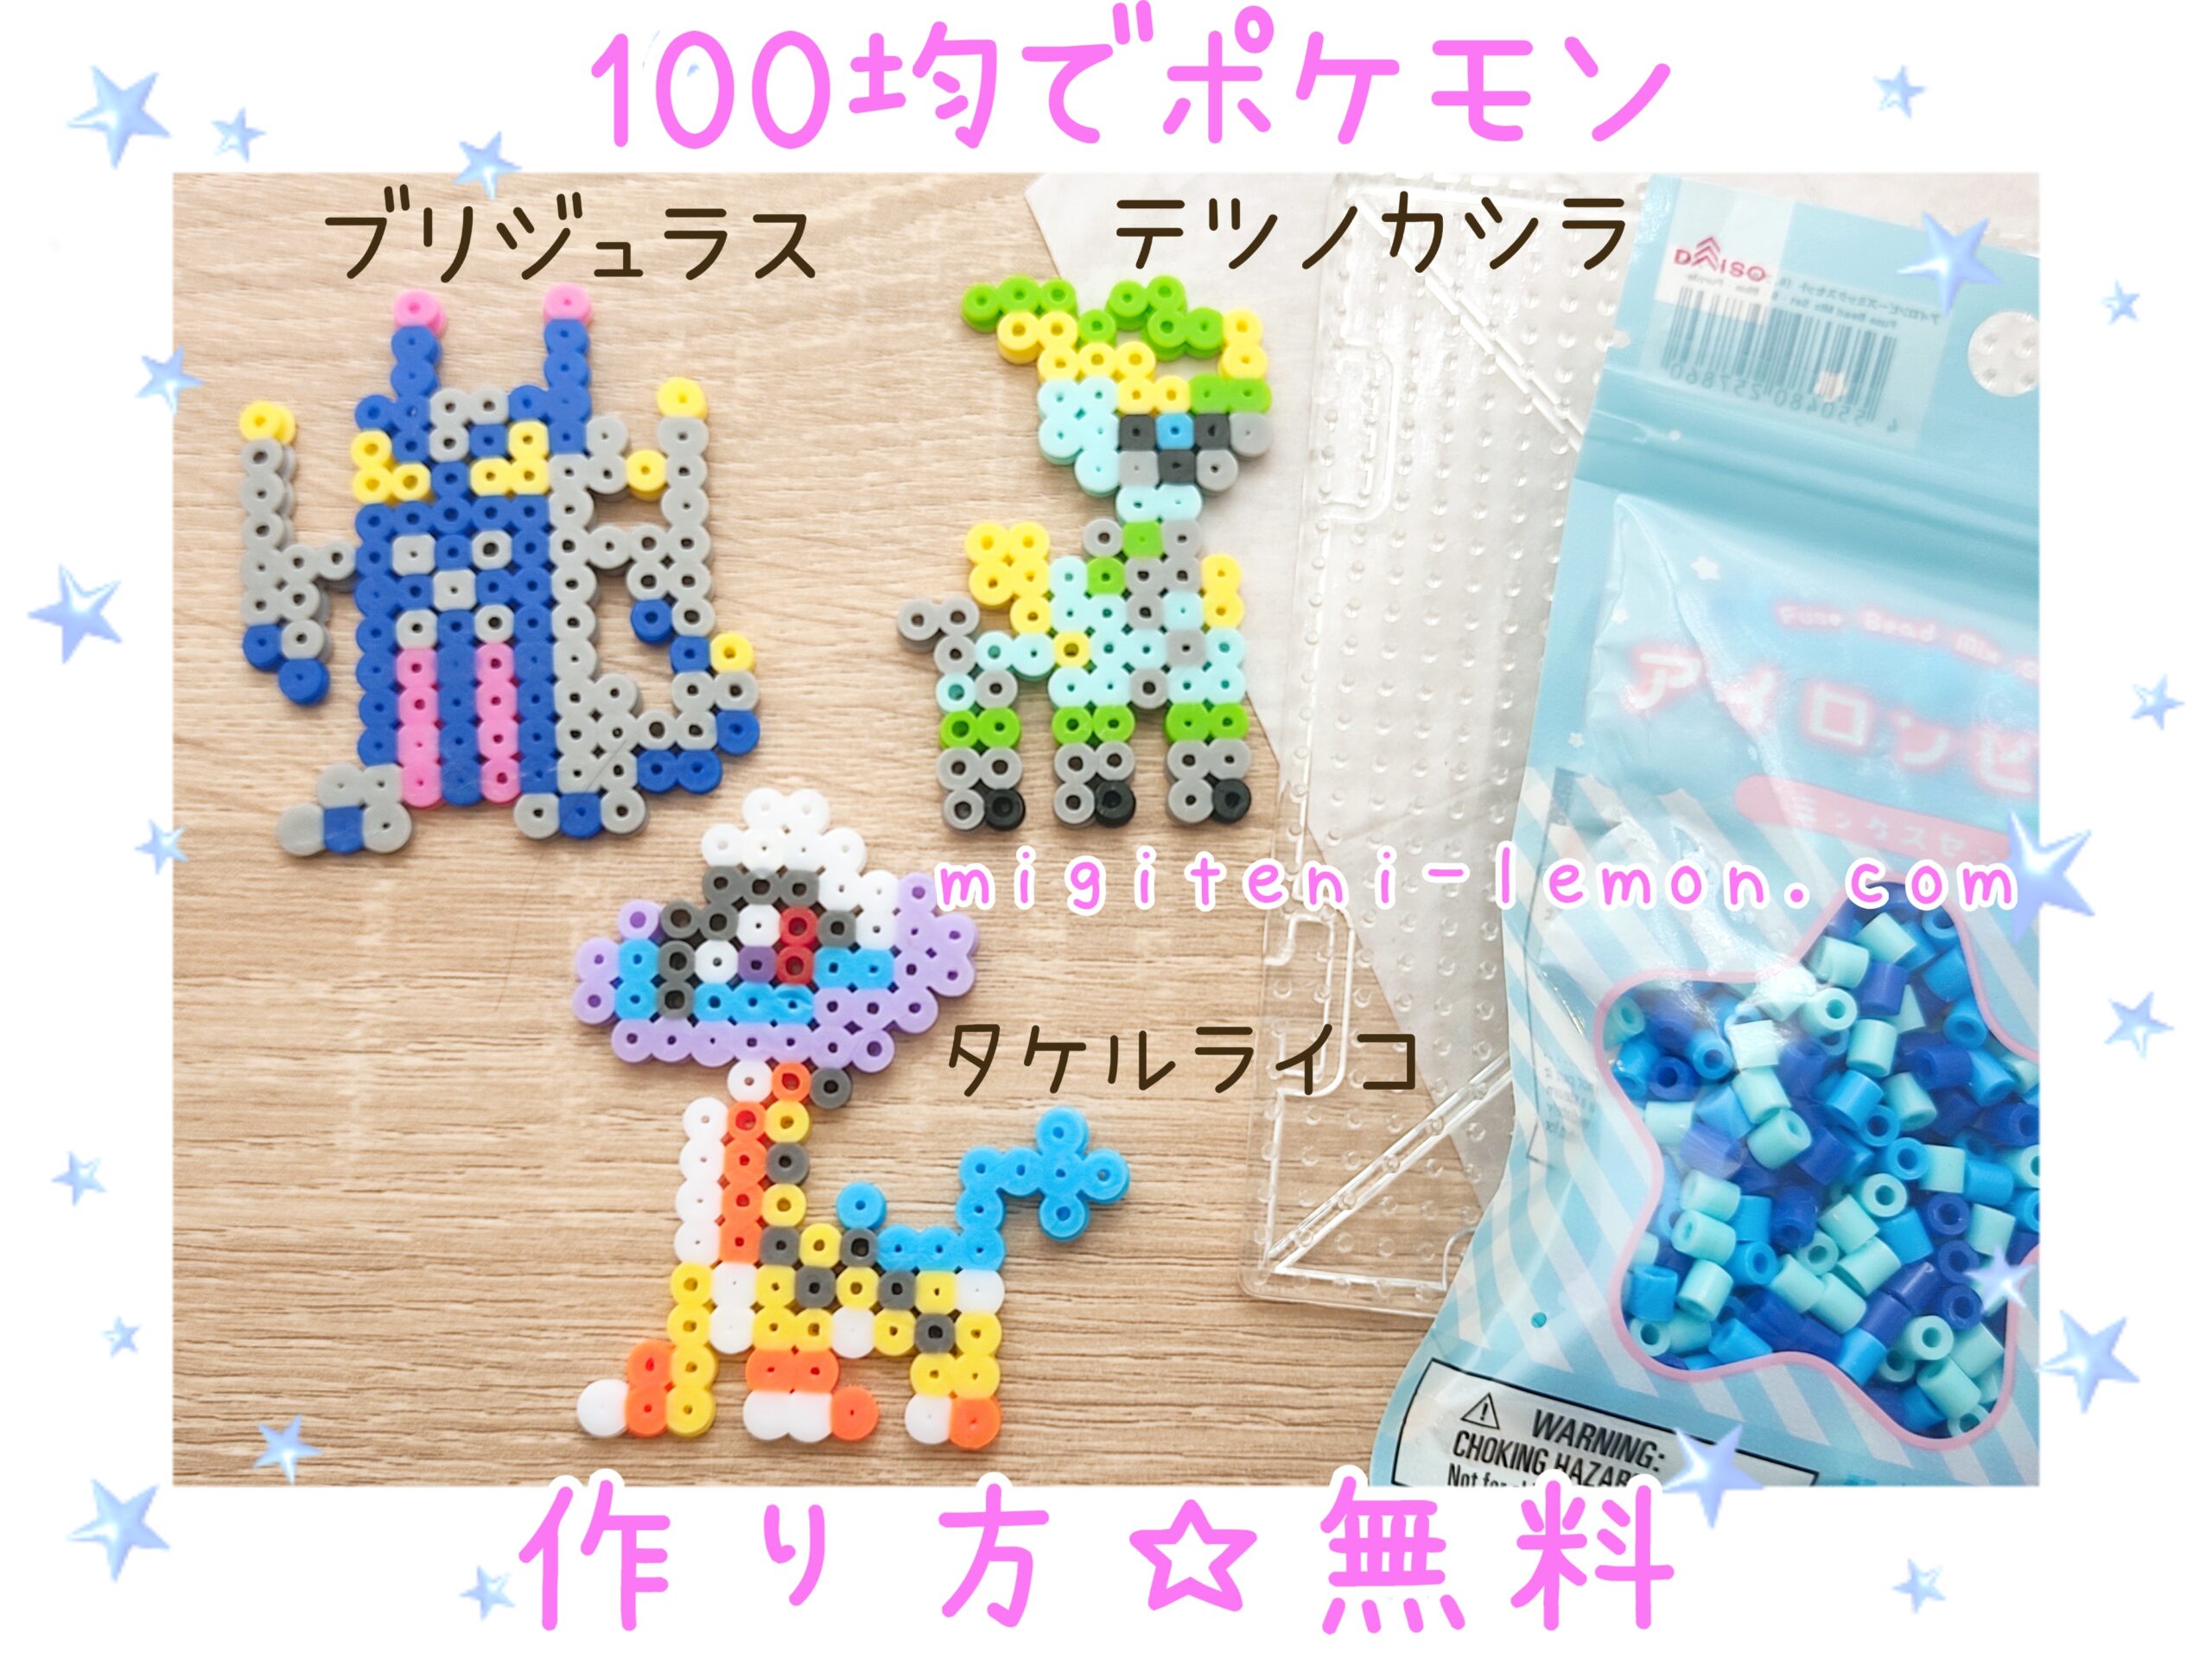 briduras-archaludon-takeruraiko-ragingbolt-tetsunokashira-ironcrown-pokemon-beads-zuan-free